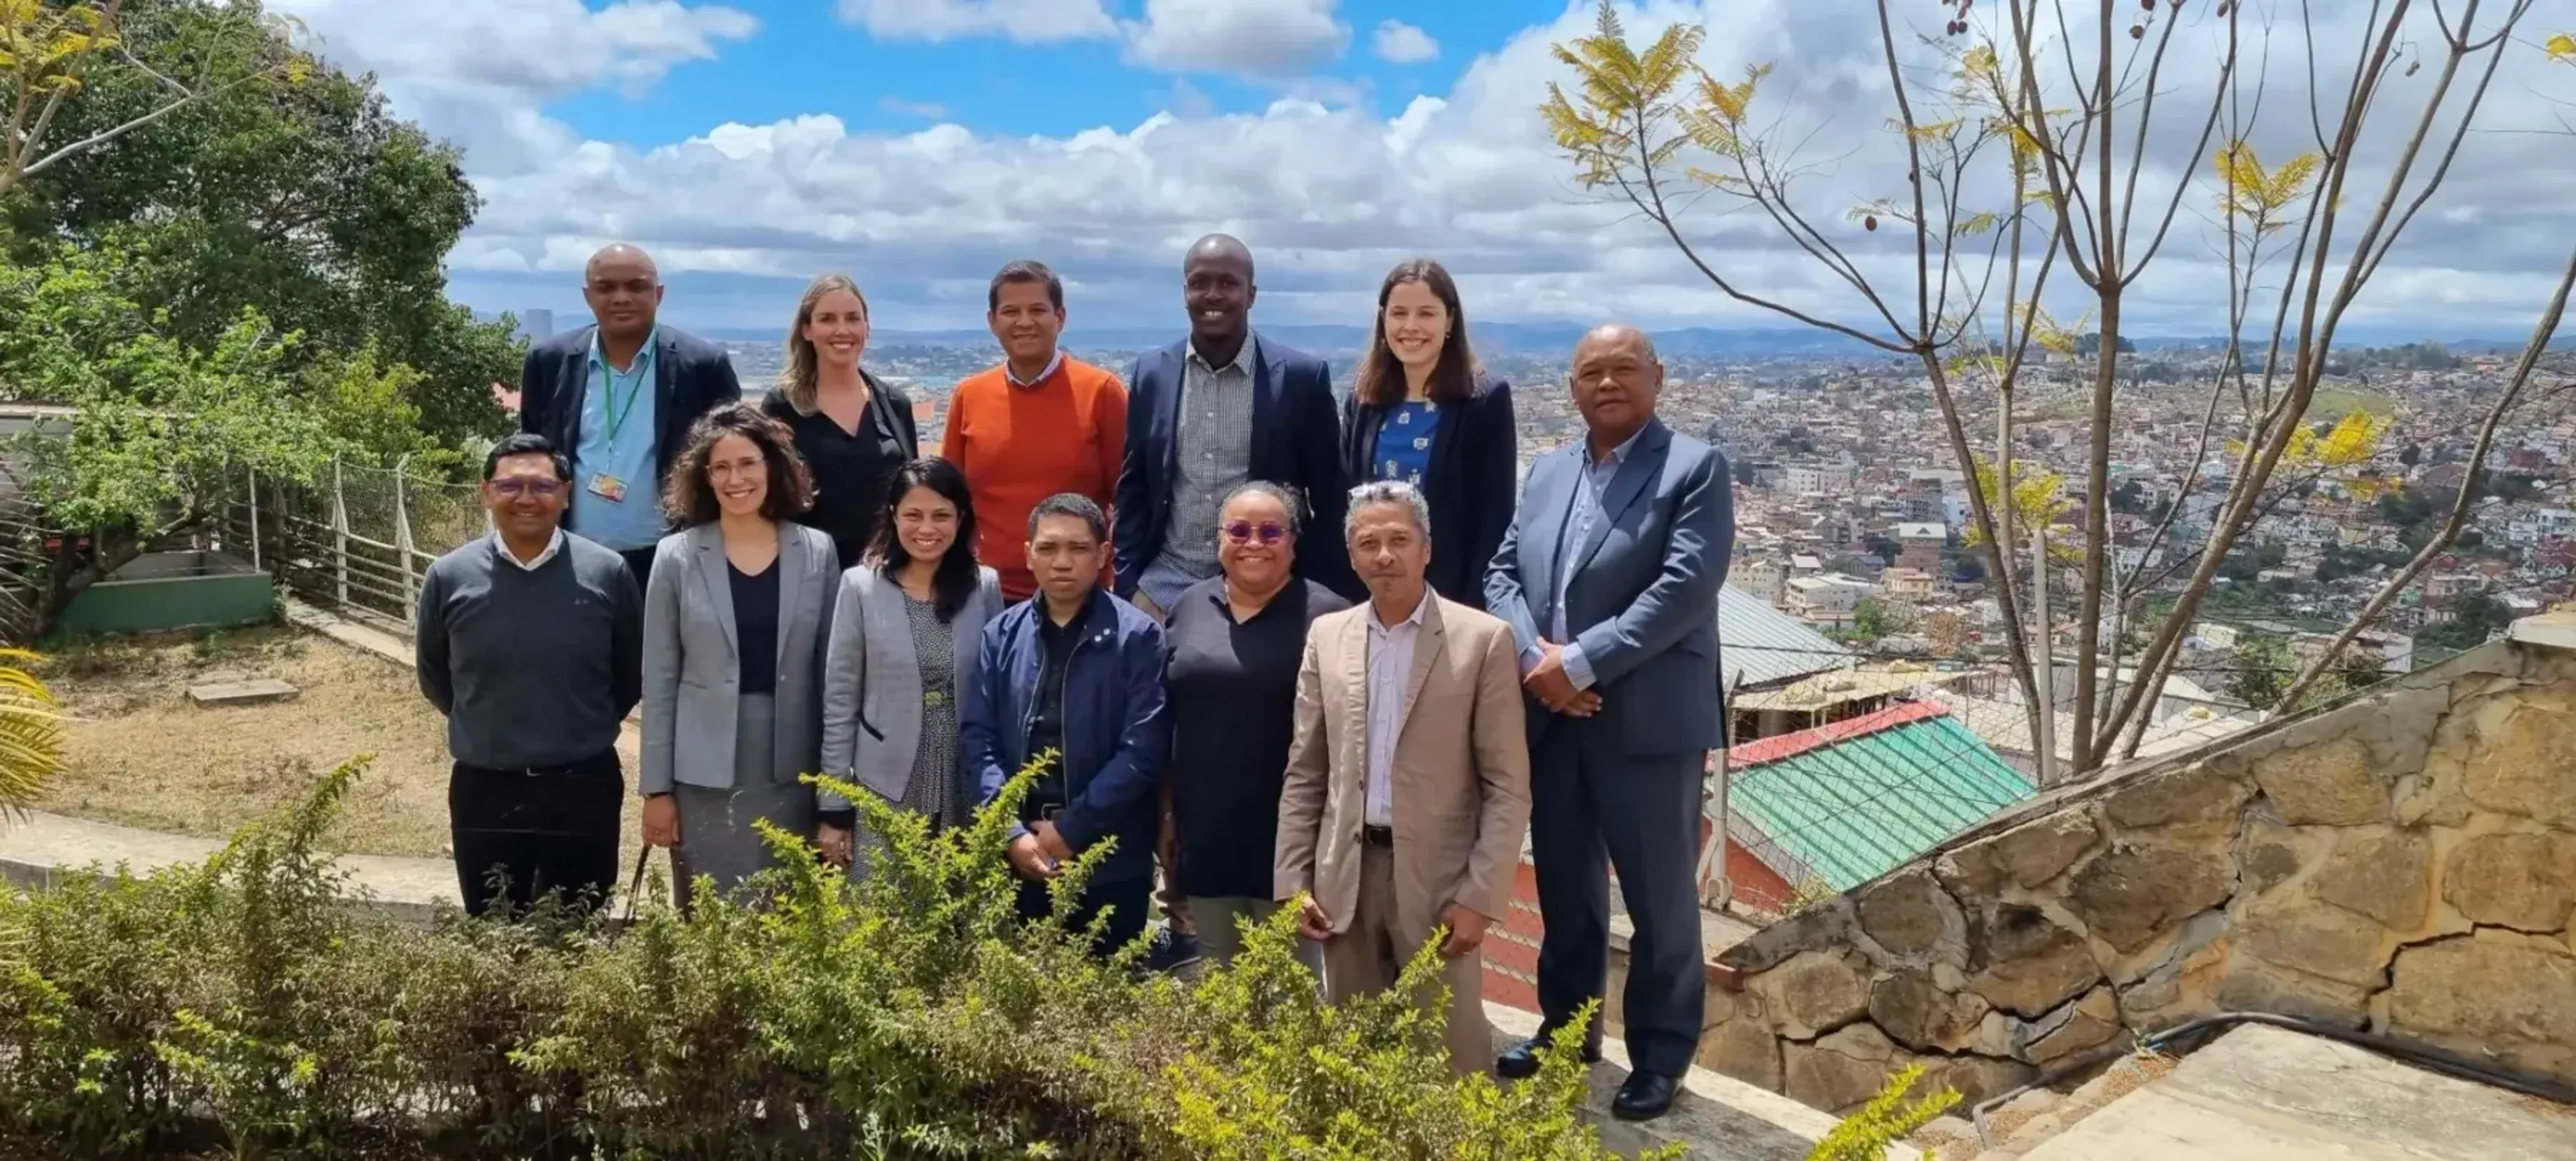 Public Digital and the Malagasy team